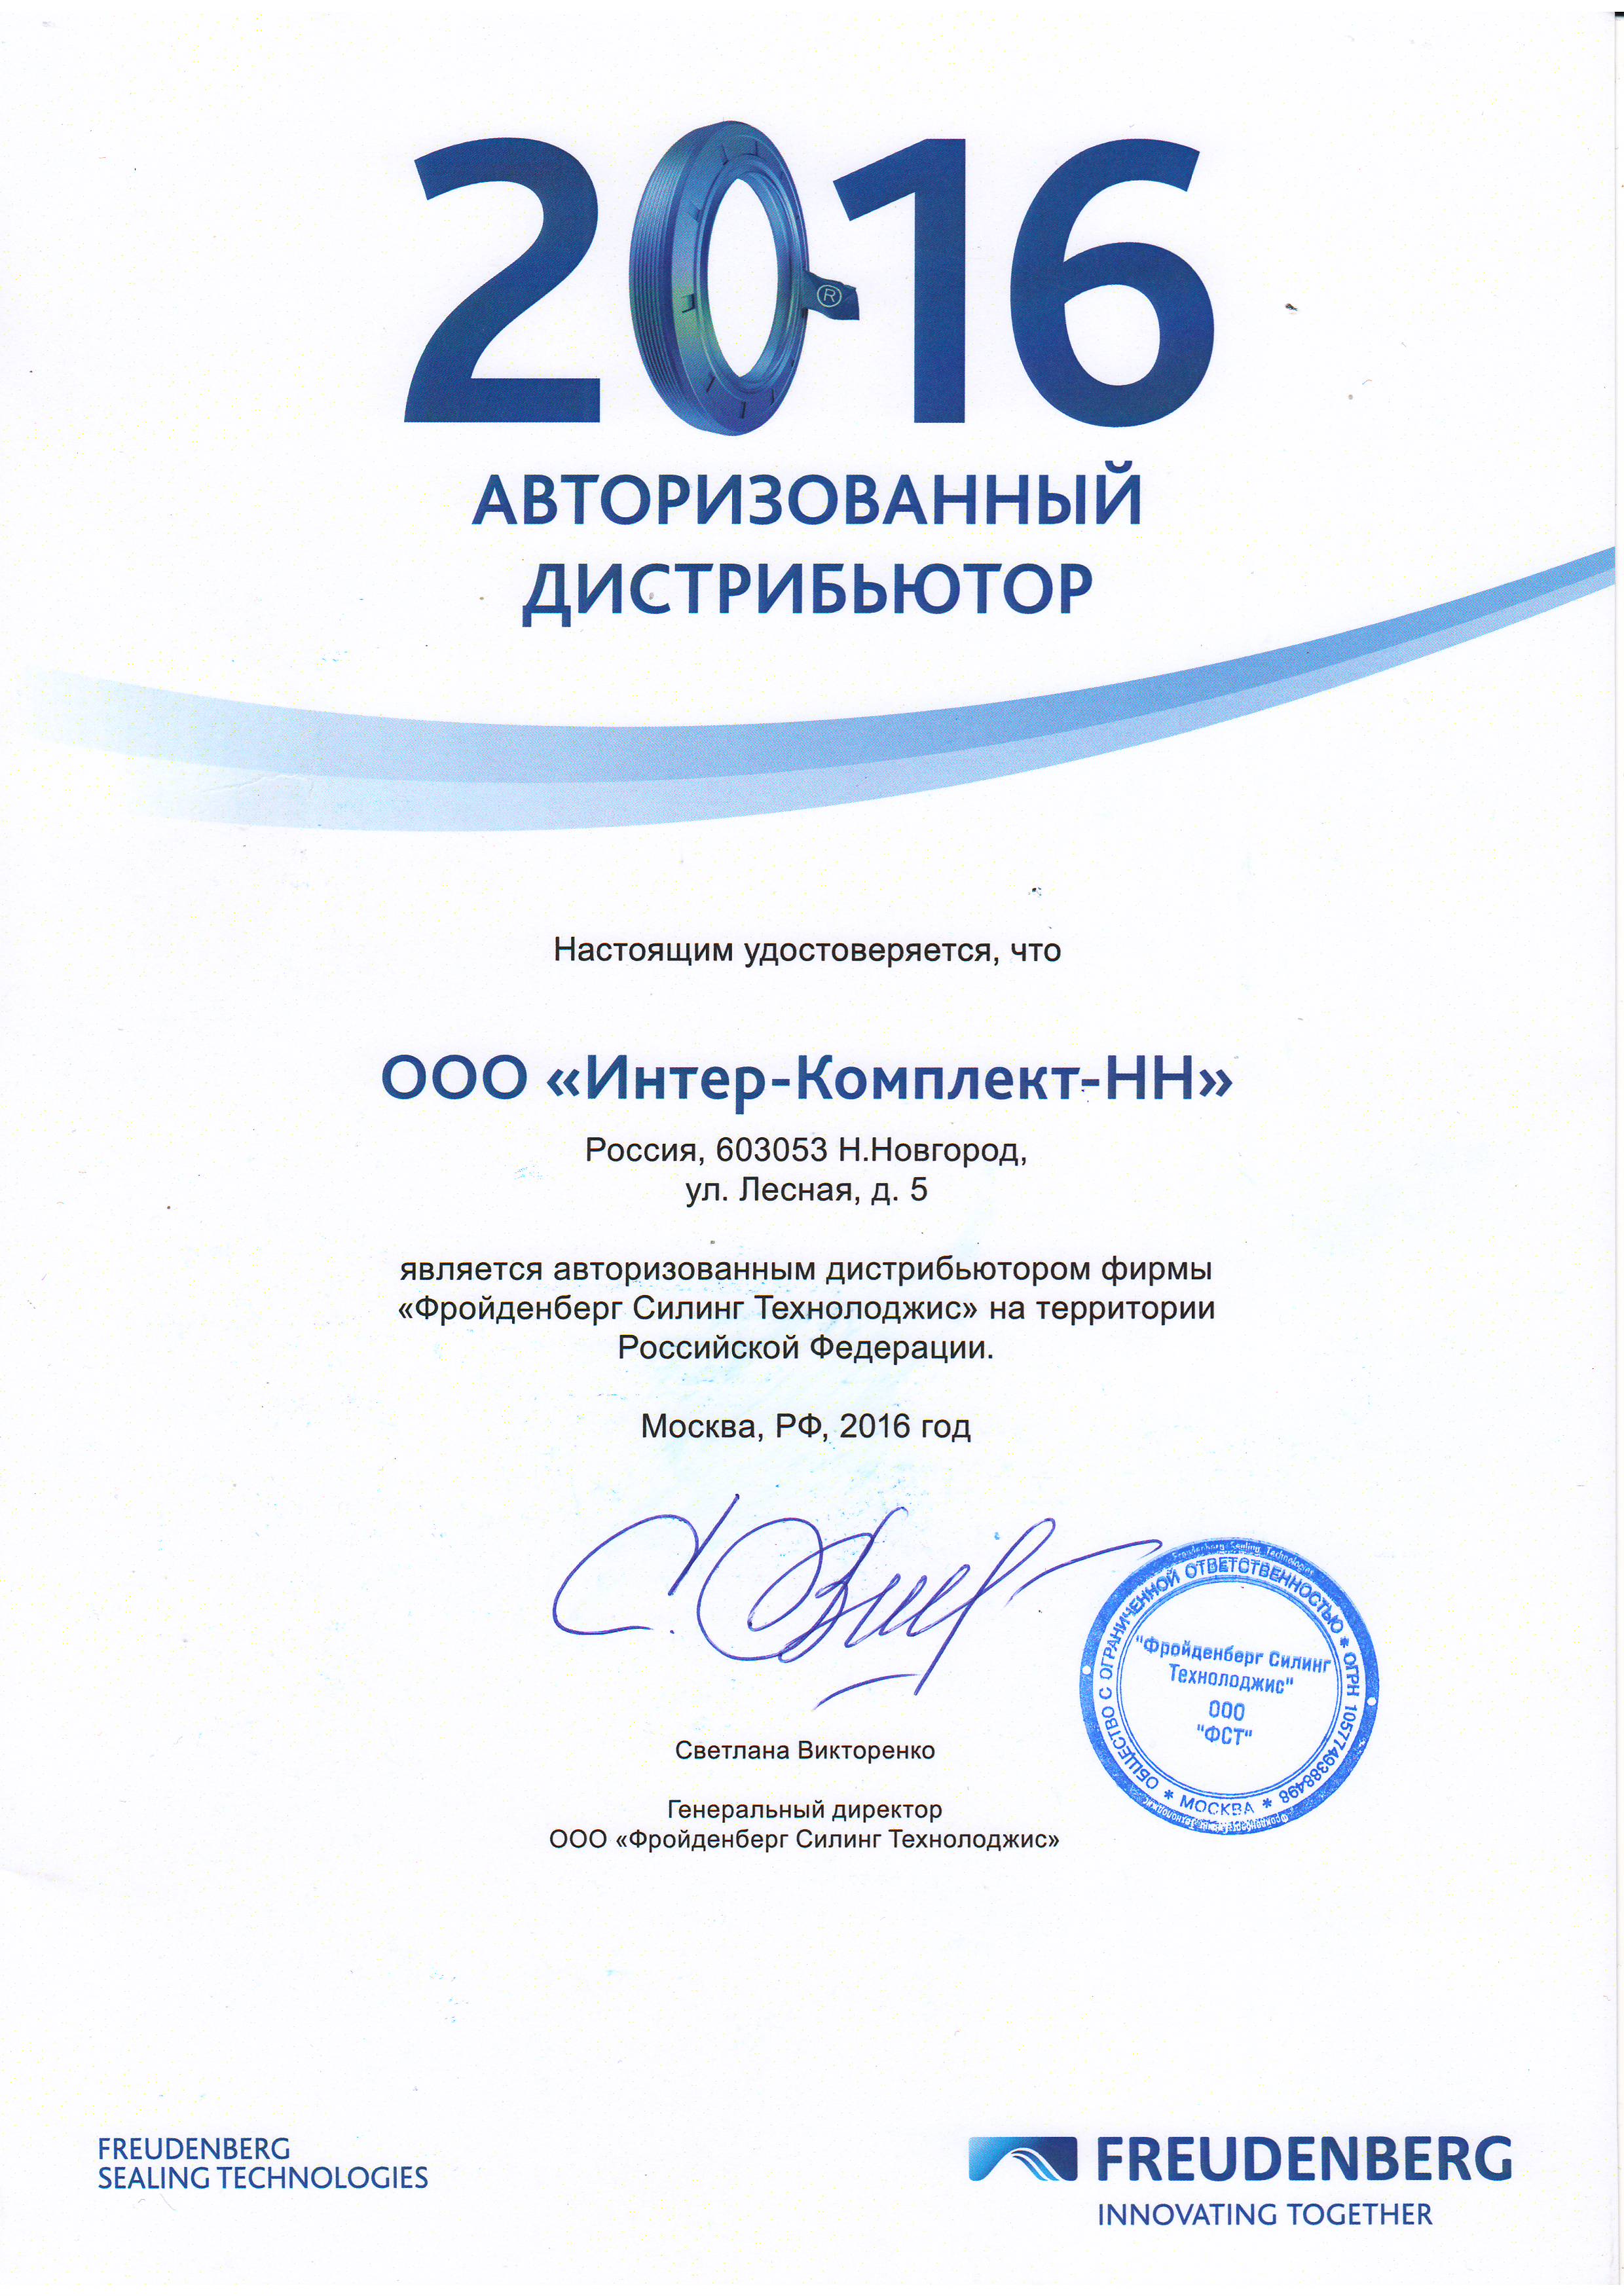 Сертификат FST 2016